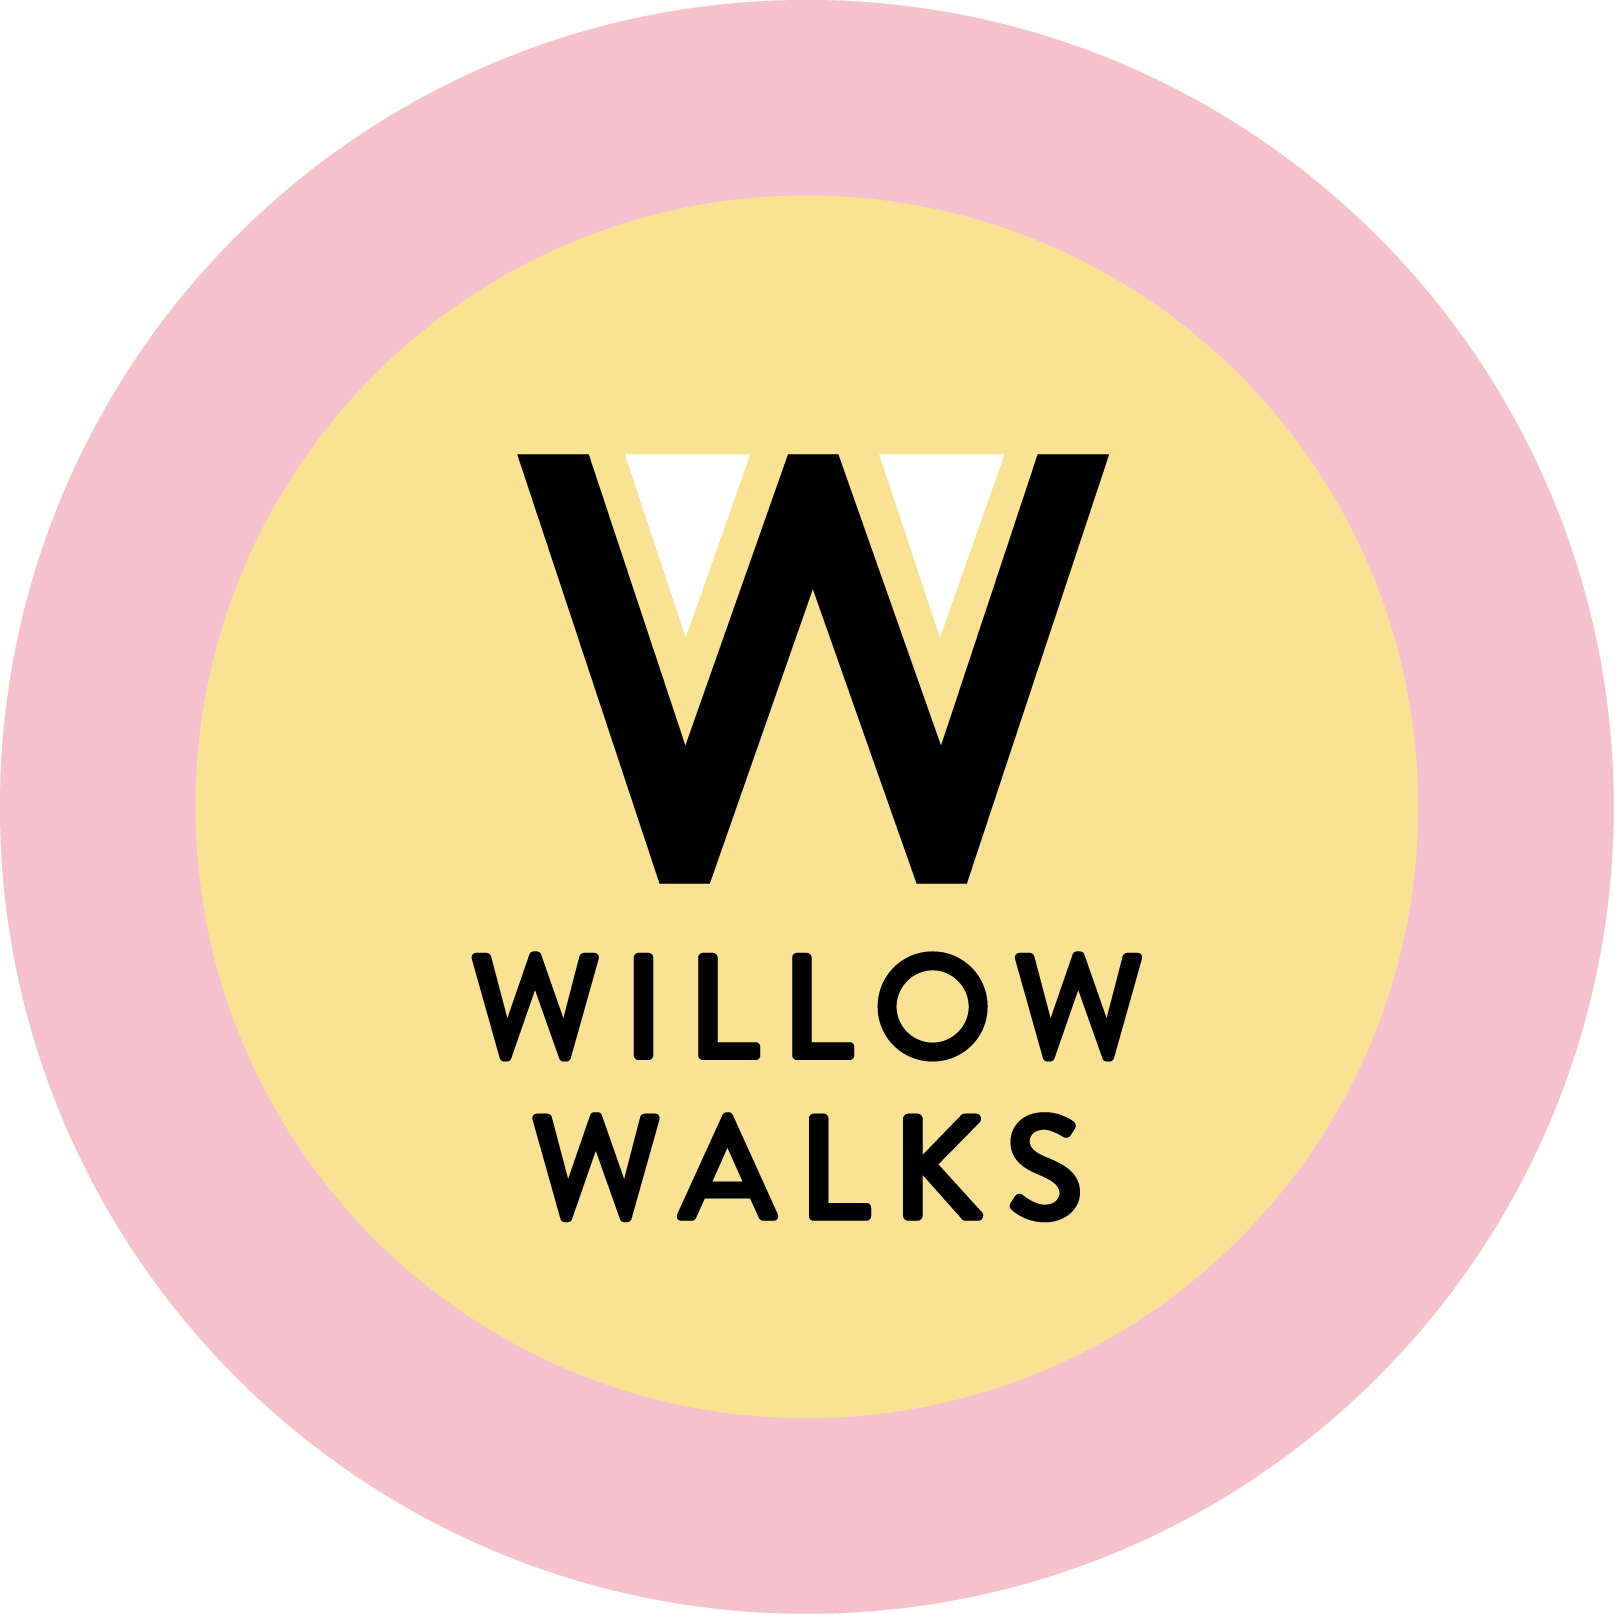 Willow Walks